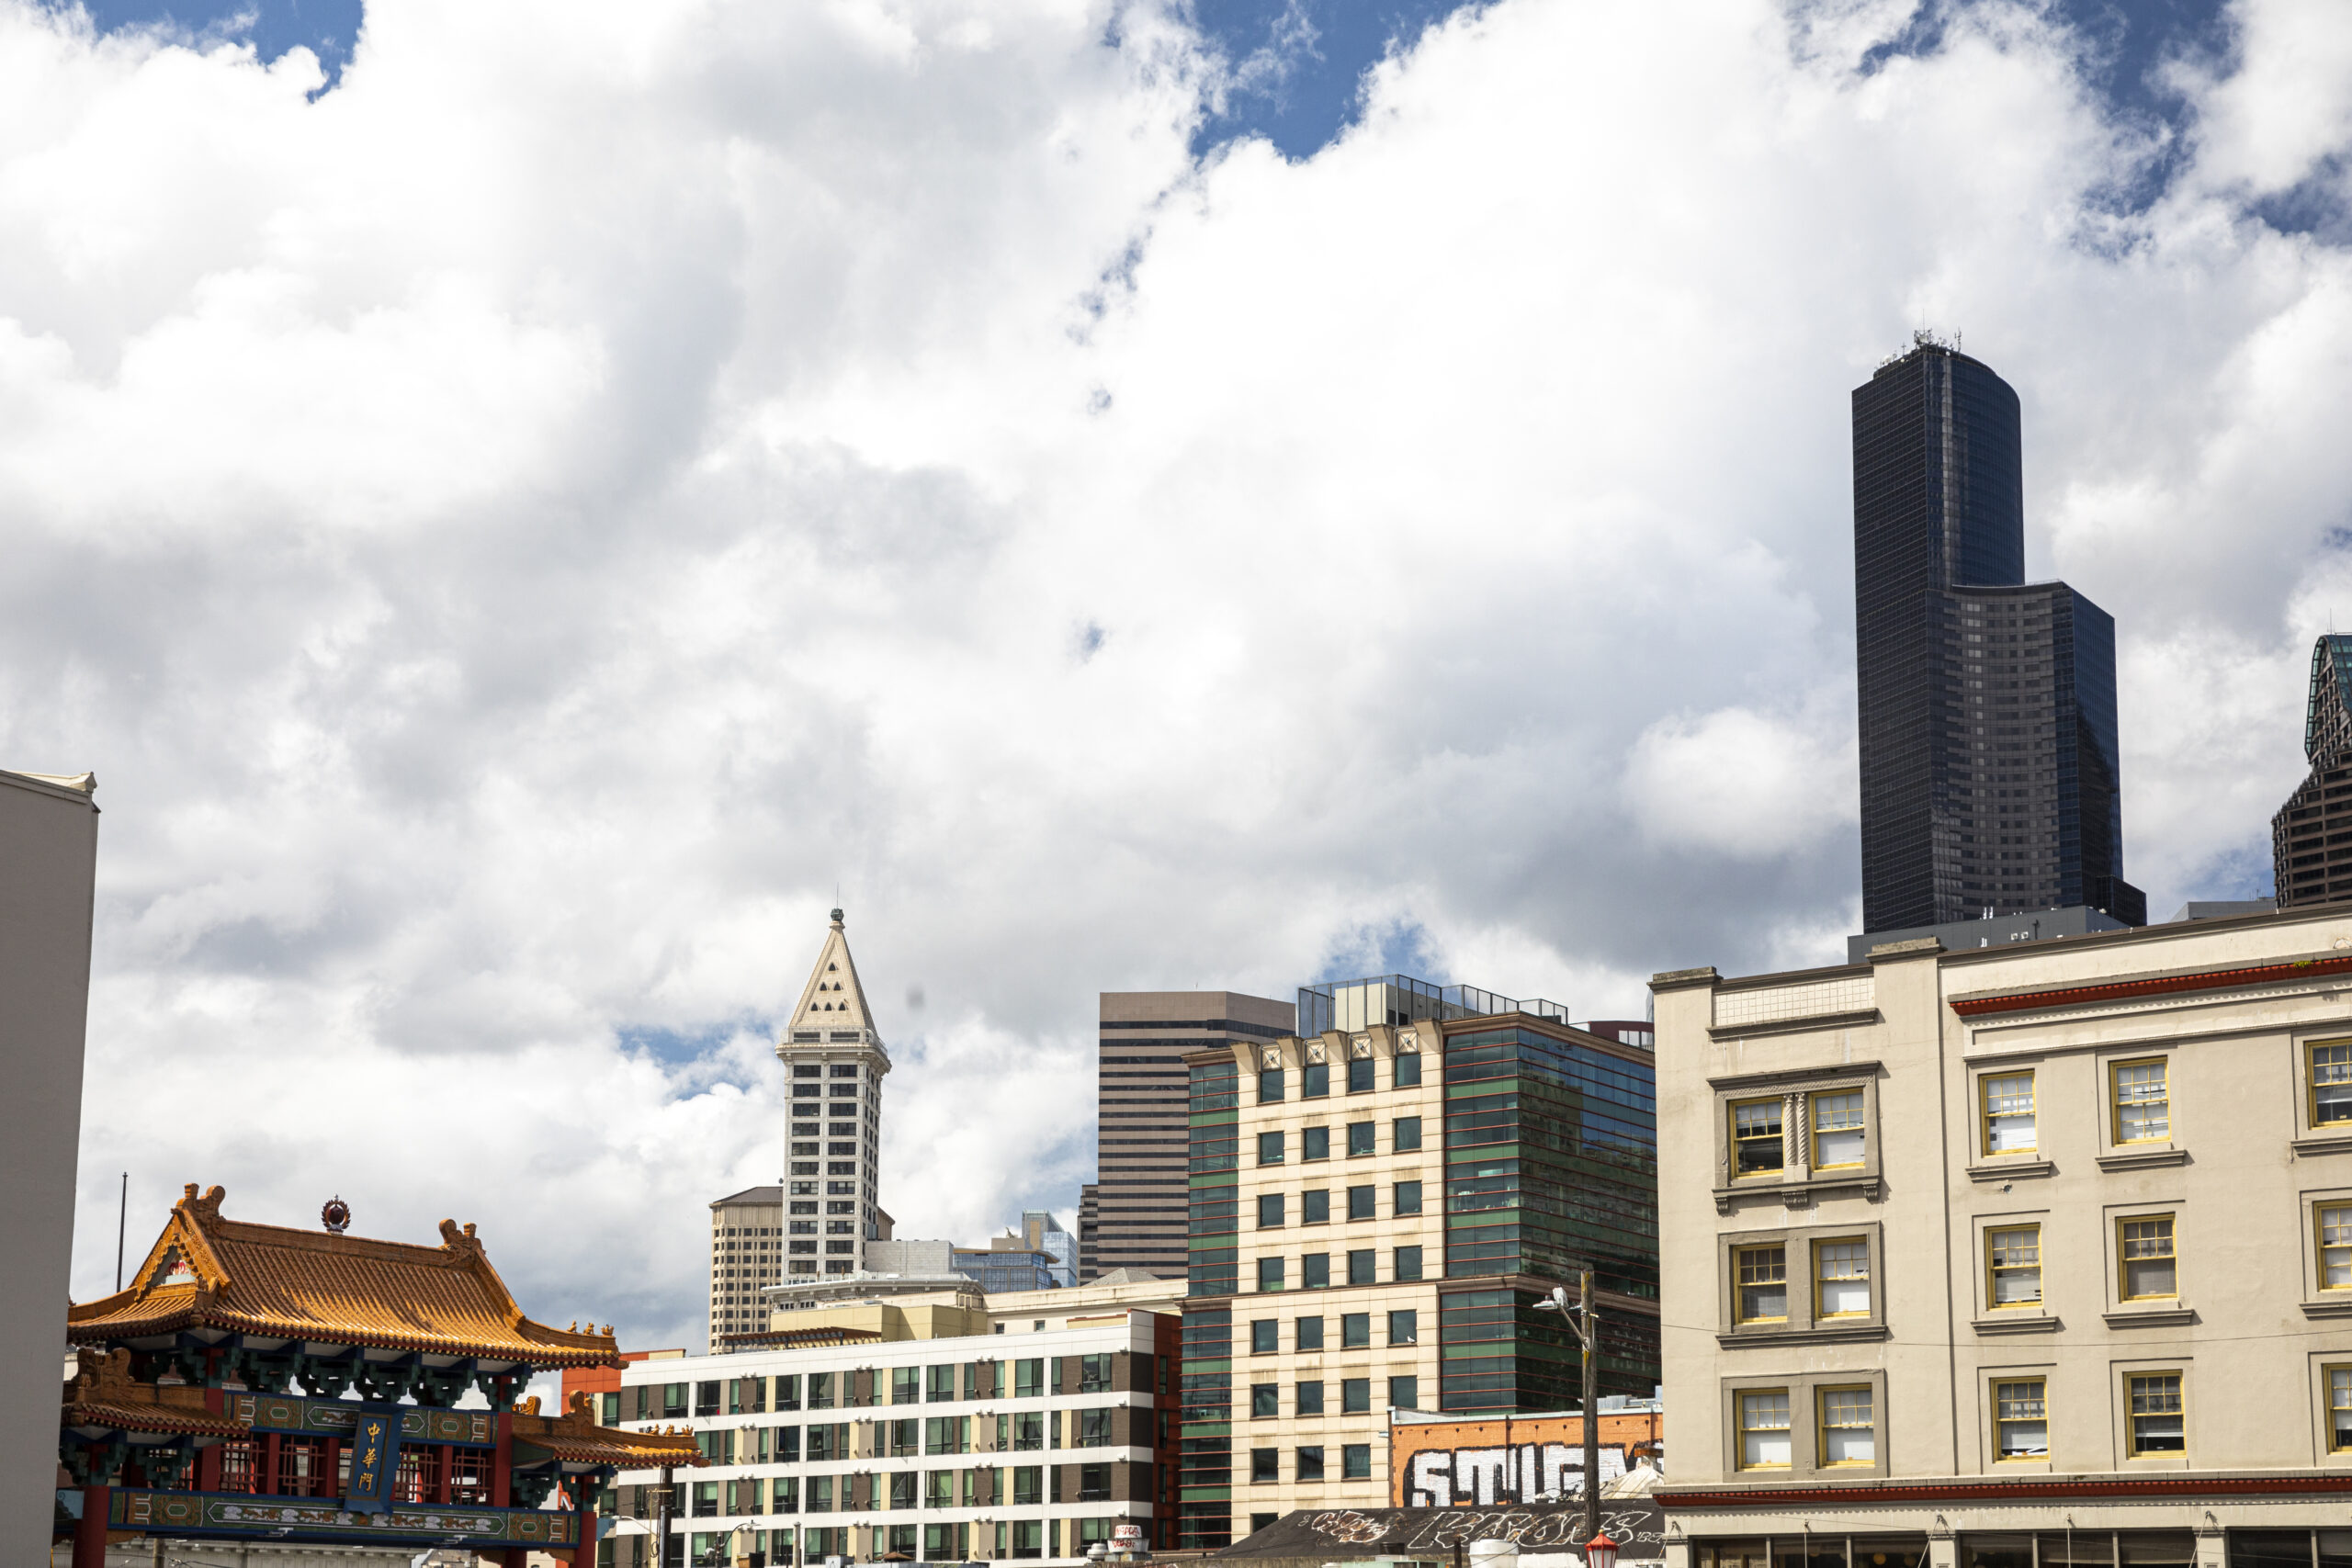 Skyline of buildings in Seattle's International District